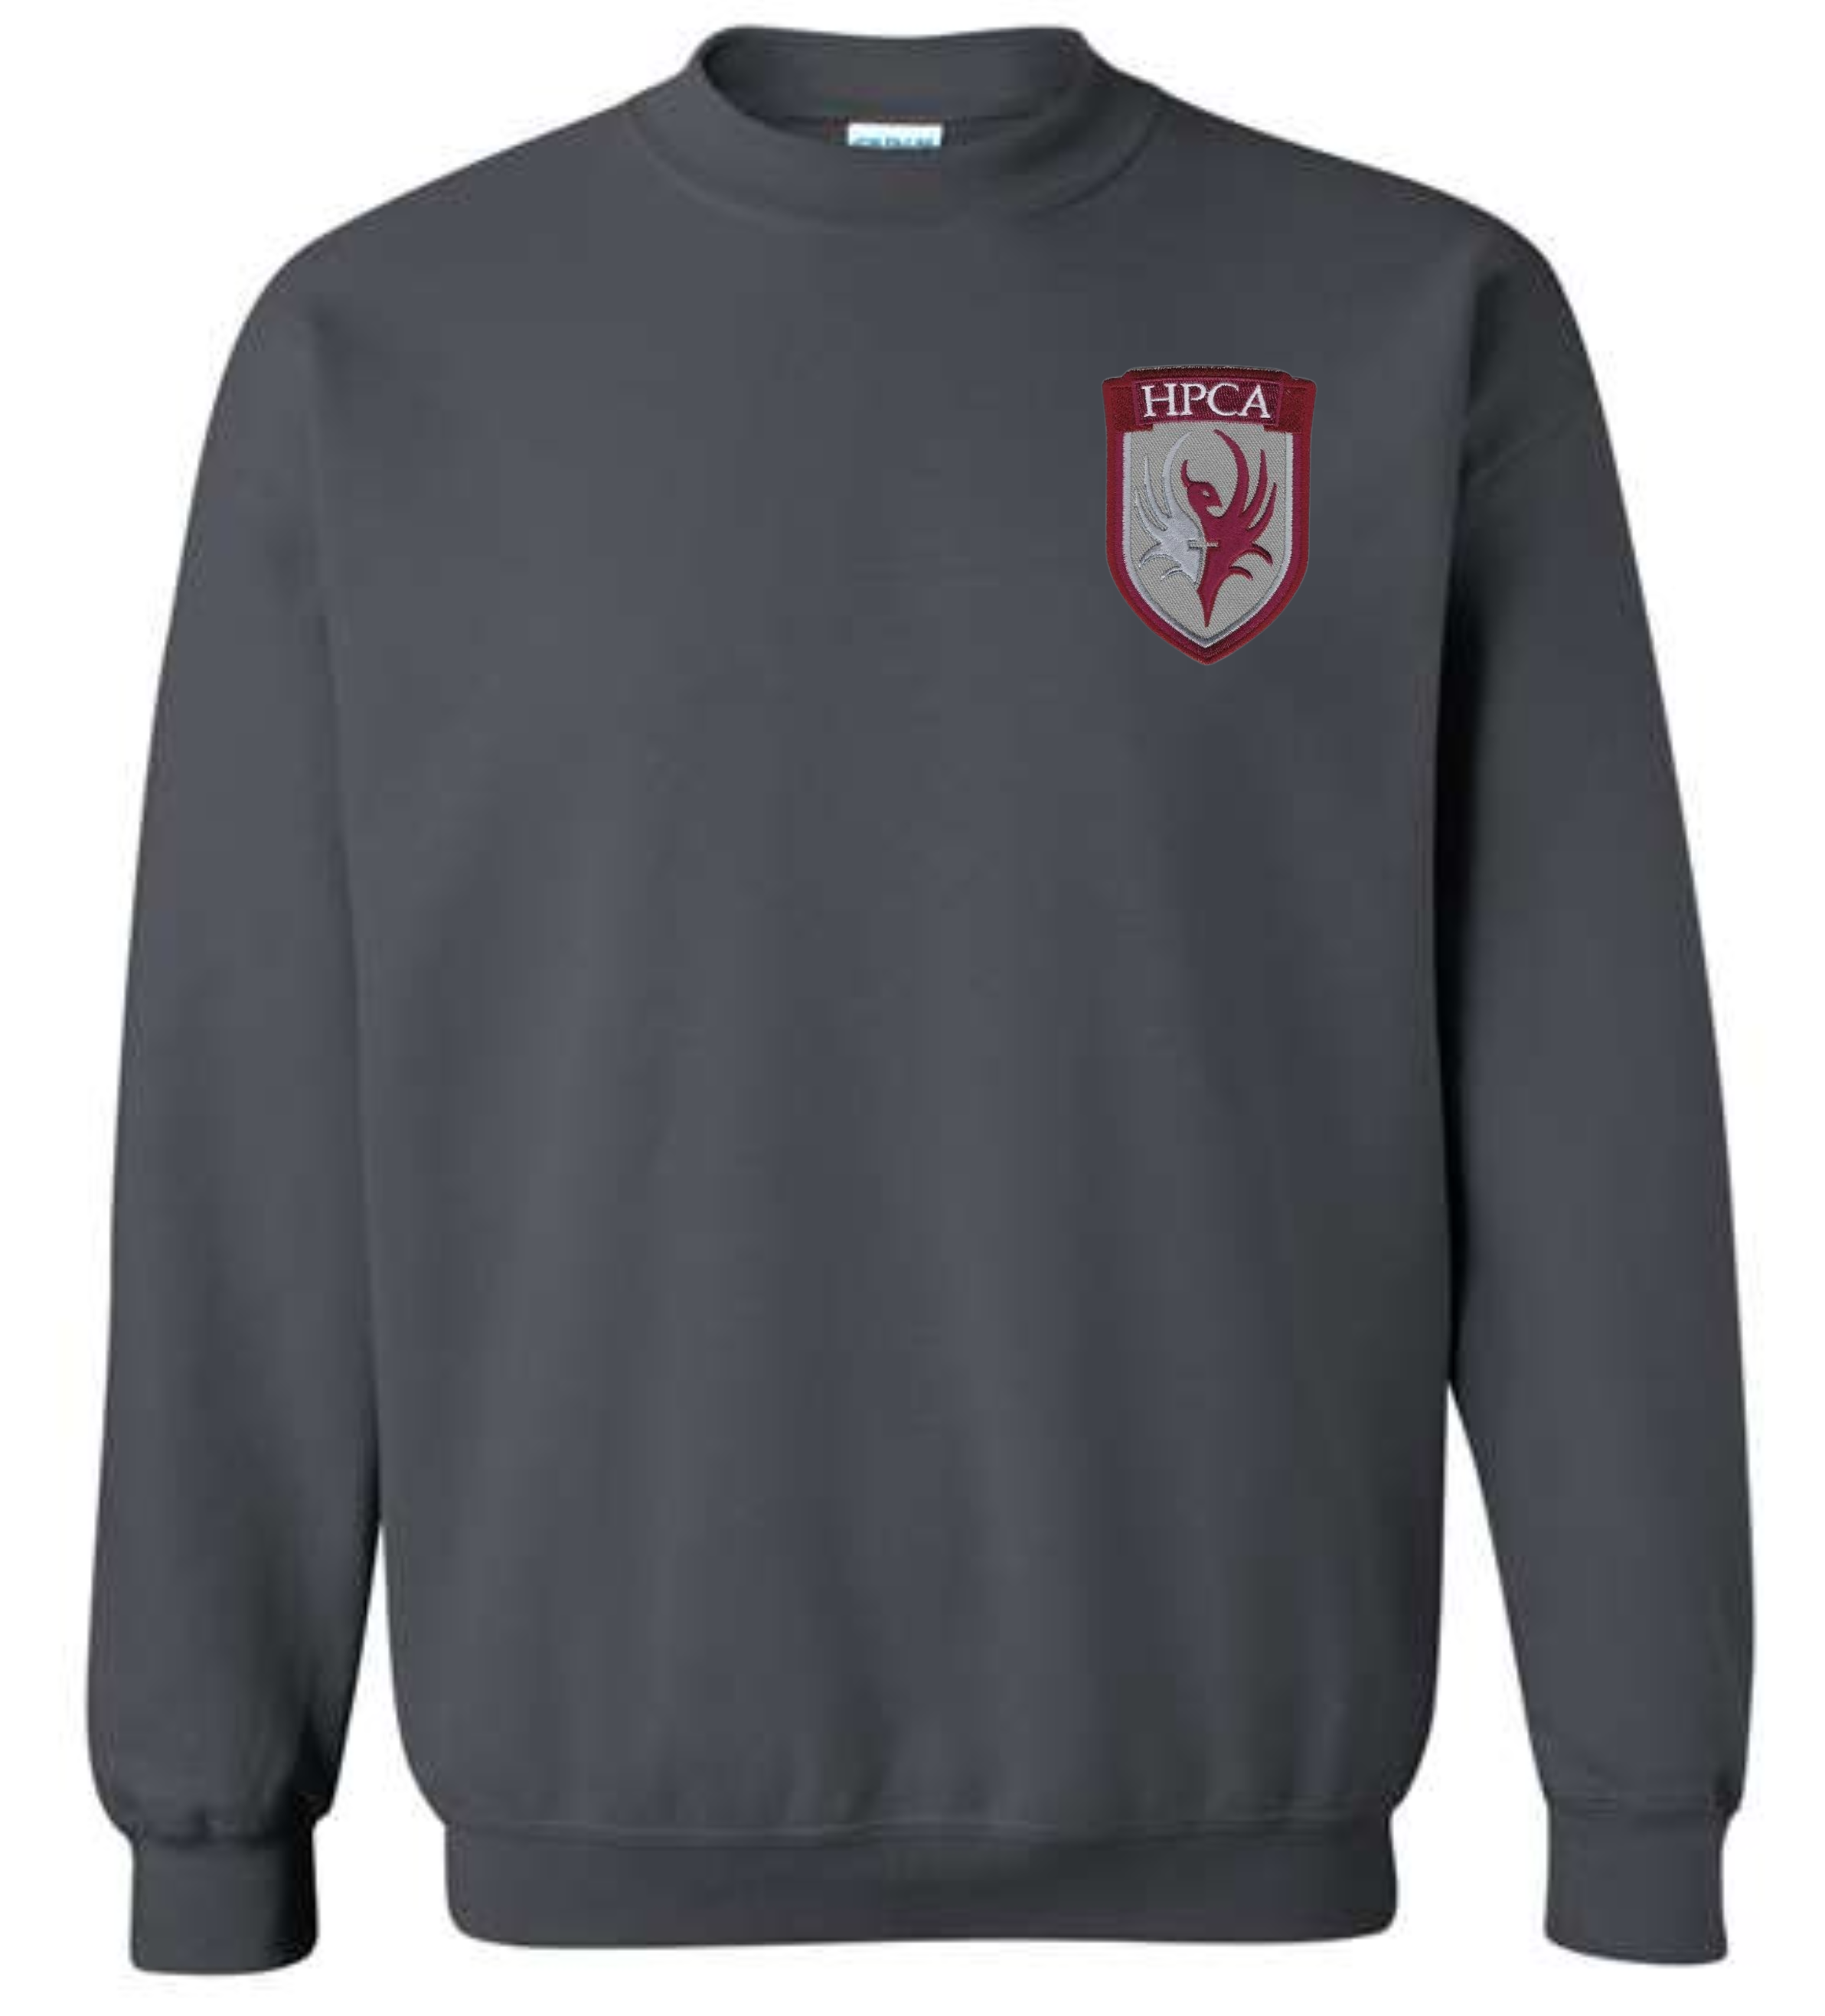 uniform sweatshirt for hunting park christian academy